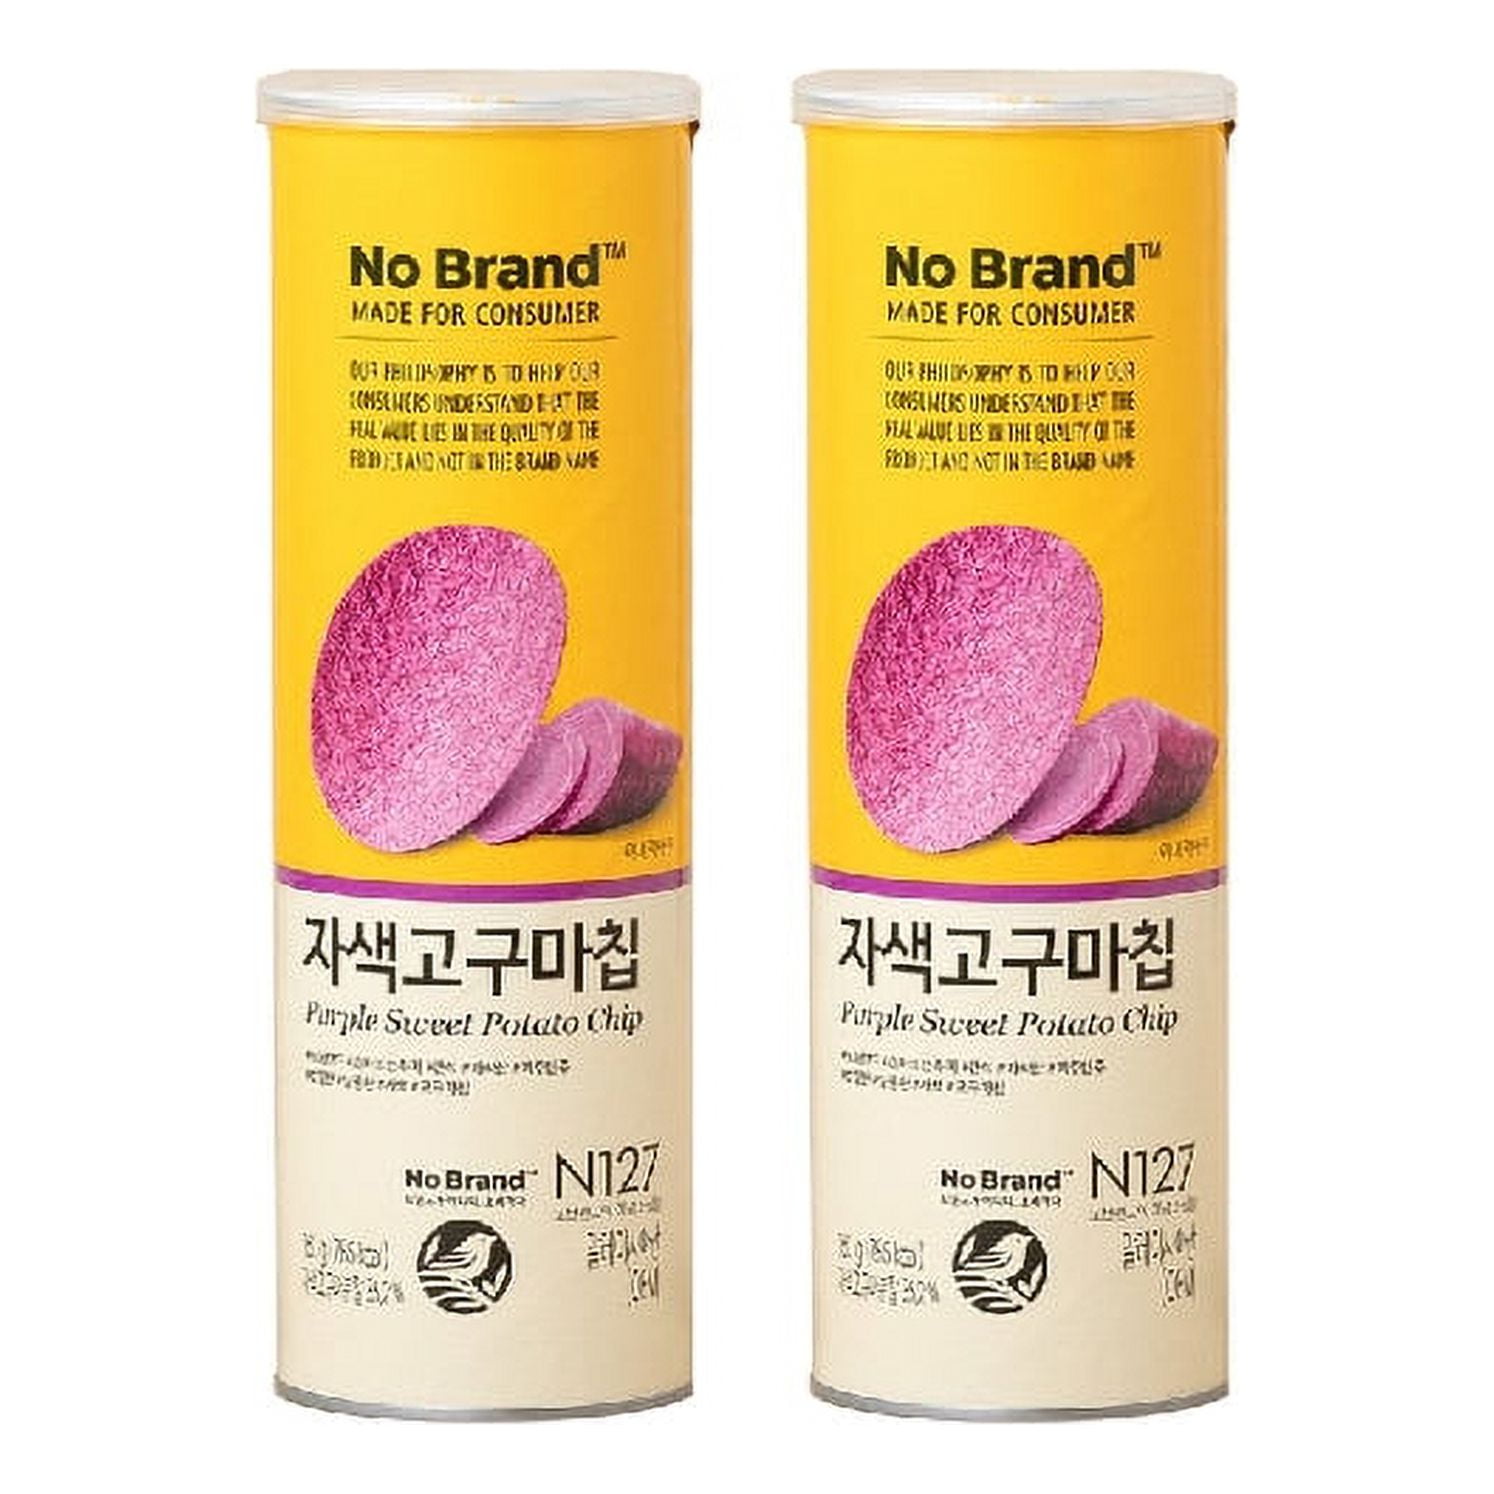 NO BRAND Purple Sweet Potato Chips 160g x 2 